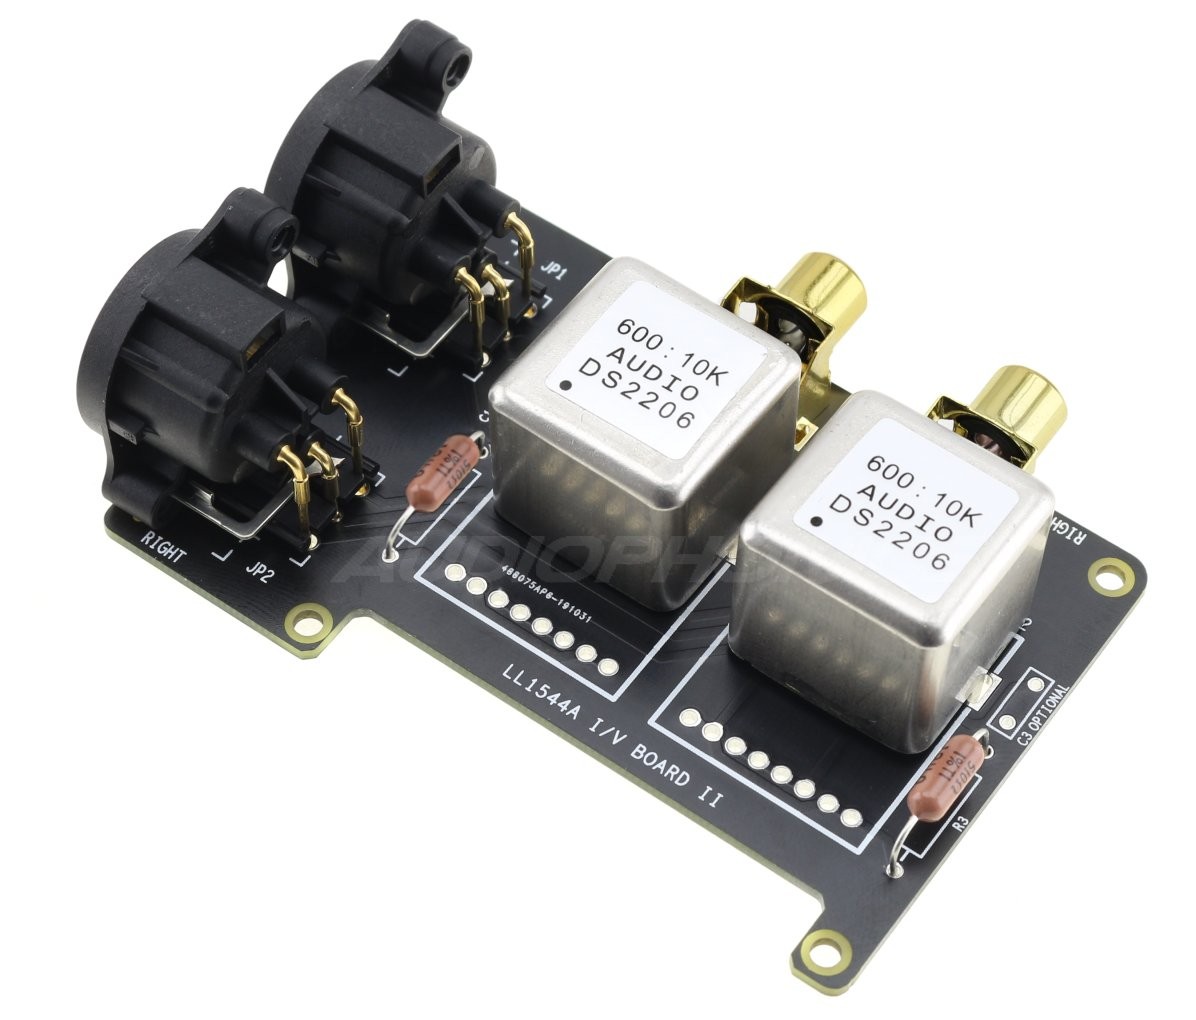 IAN CANADA TRANSFORMER I / V PCB Kit V2 output circuit for audio transformers